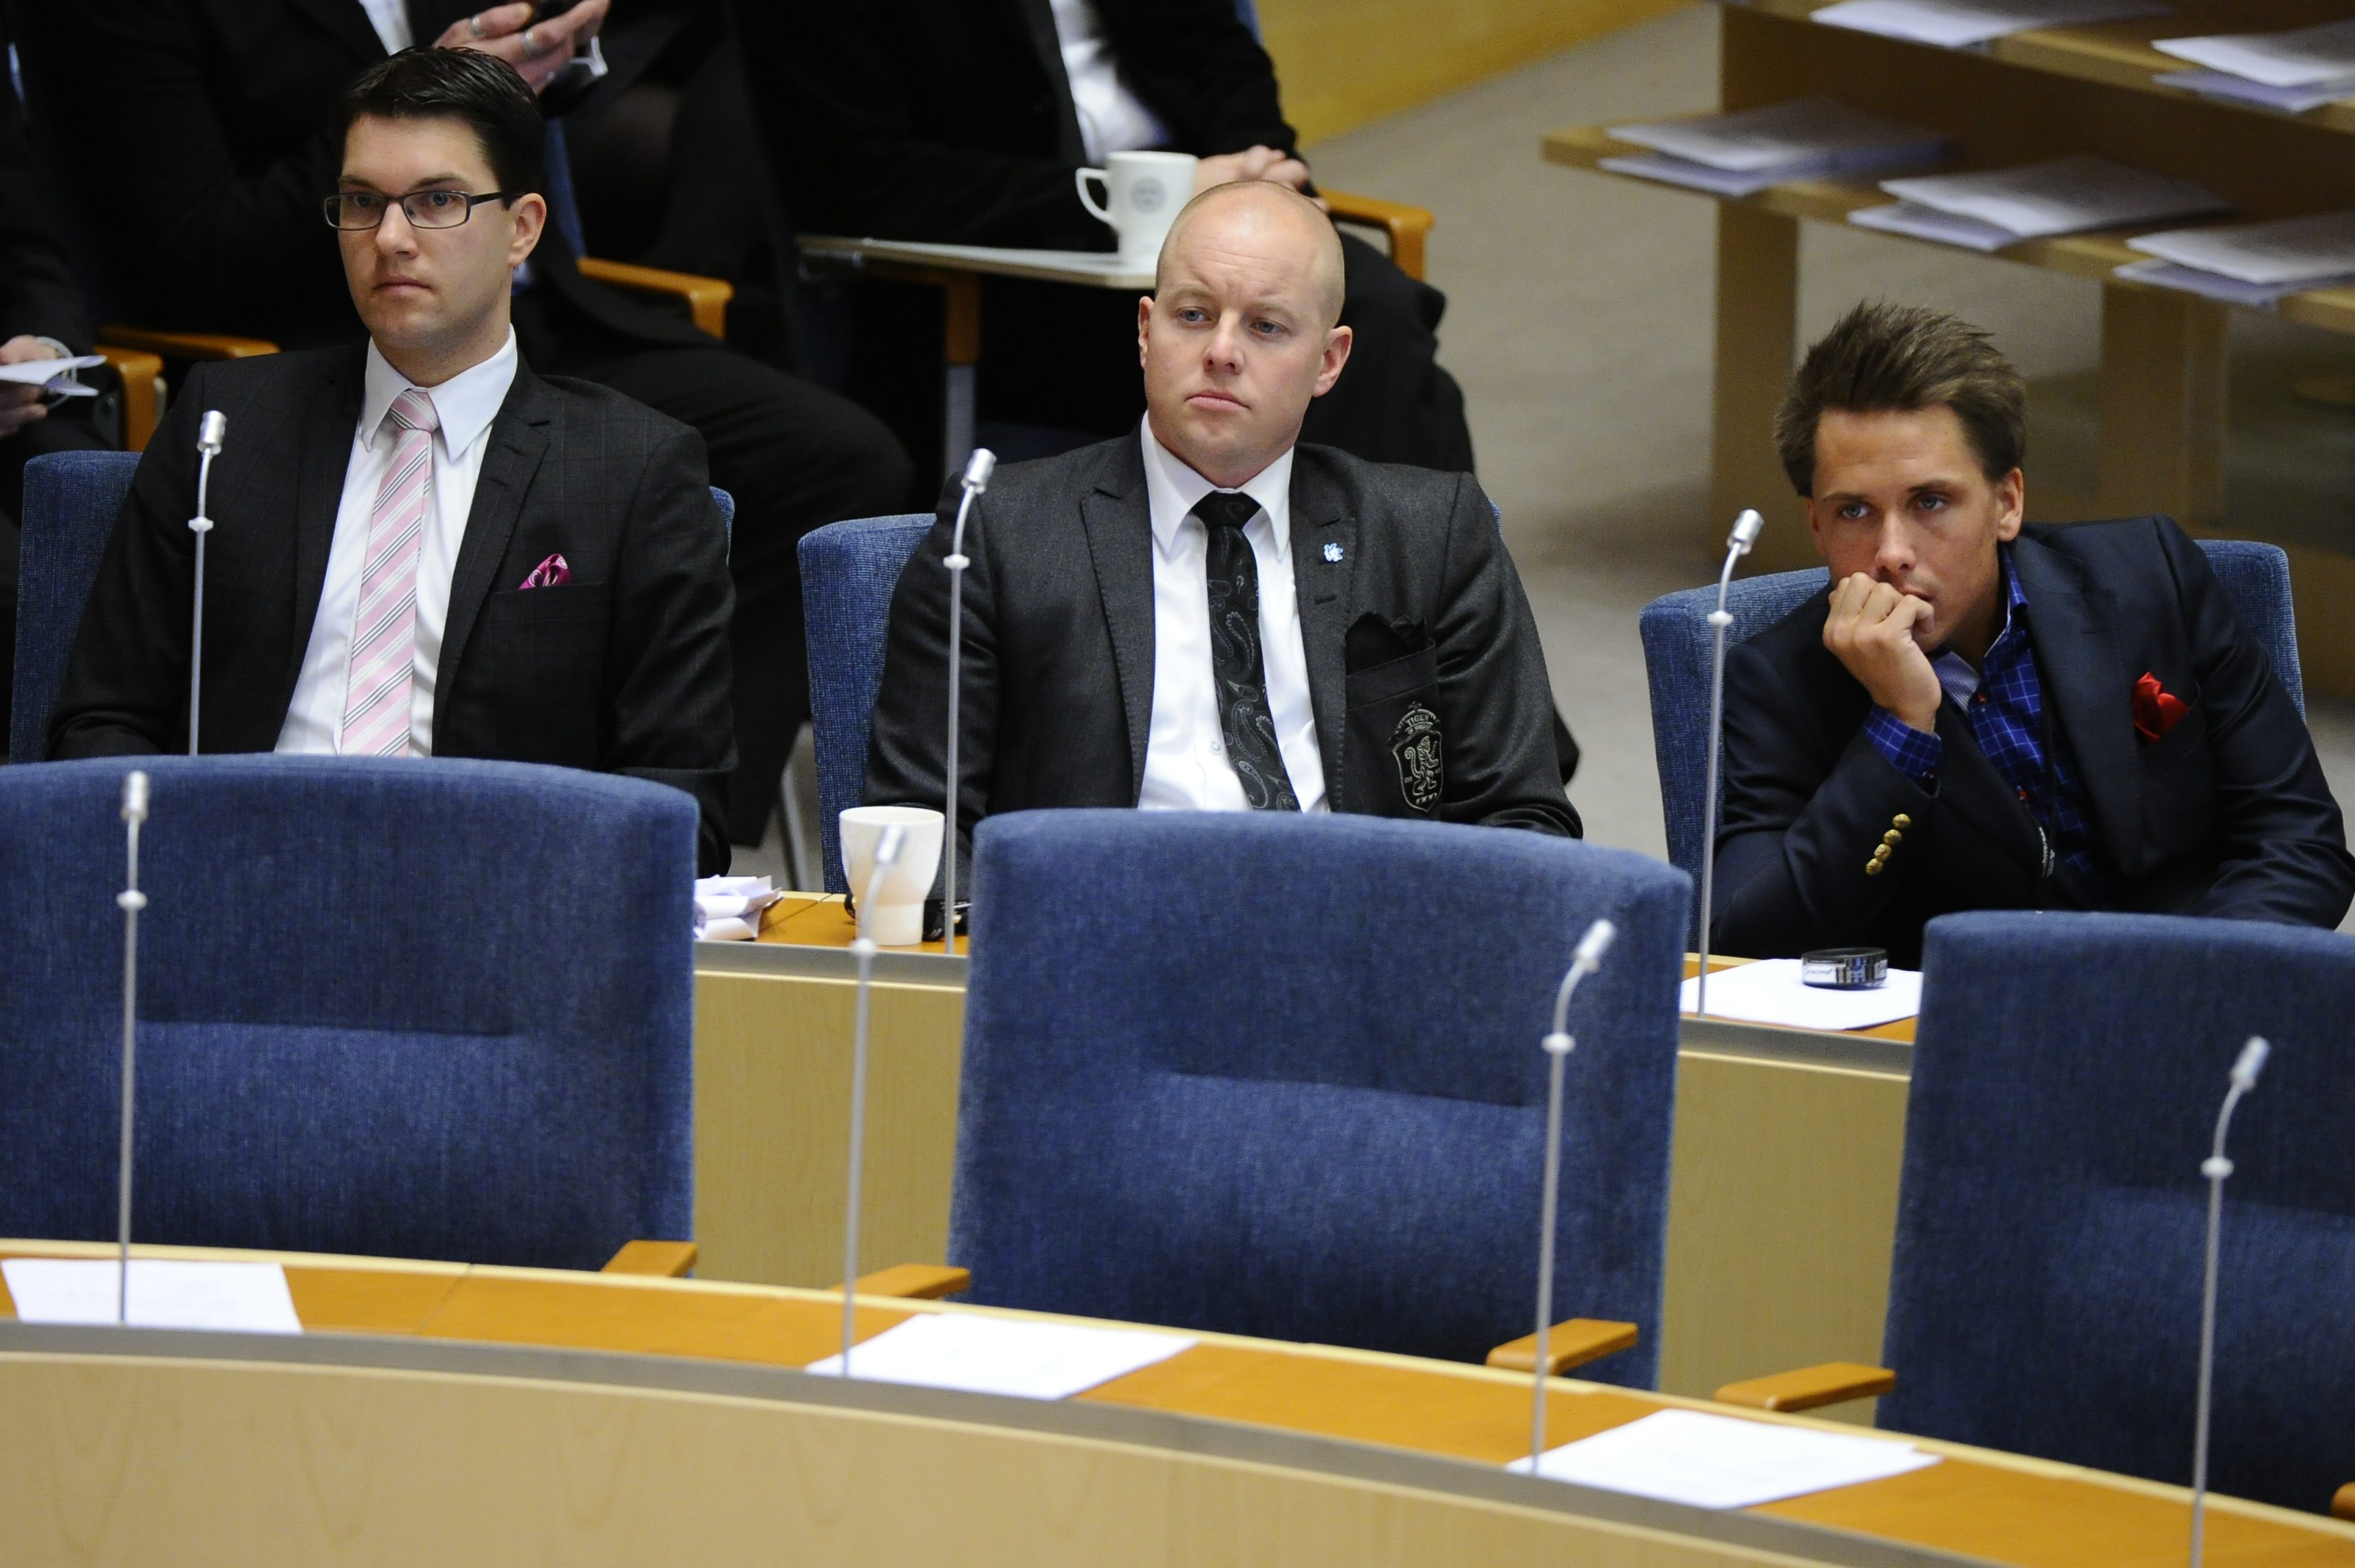 Politik, Jimmie Åkesson, Alkohol, William Petzäll, Erik Almqvist, Sverigedemokraterna